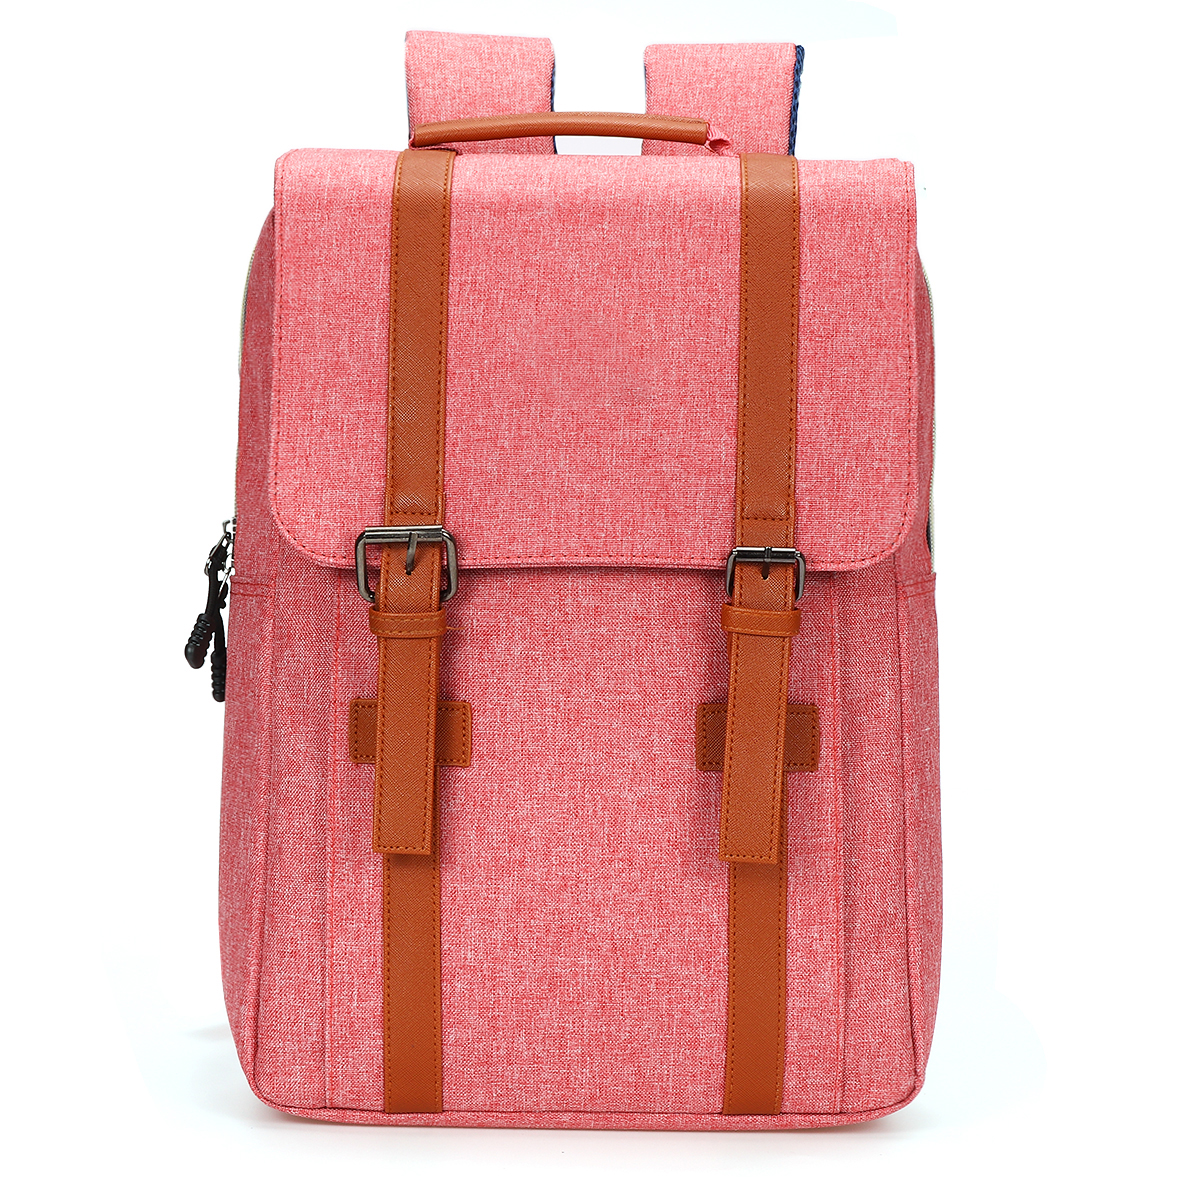 Outdoor-Travel-Backpack-Waterproof-Nylon-School-Bag-Large-Laptop-Bag-Unisex-Business-Bag-1615929-6